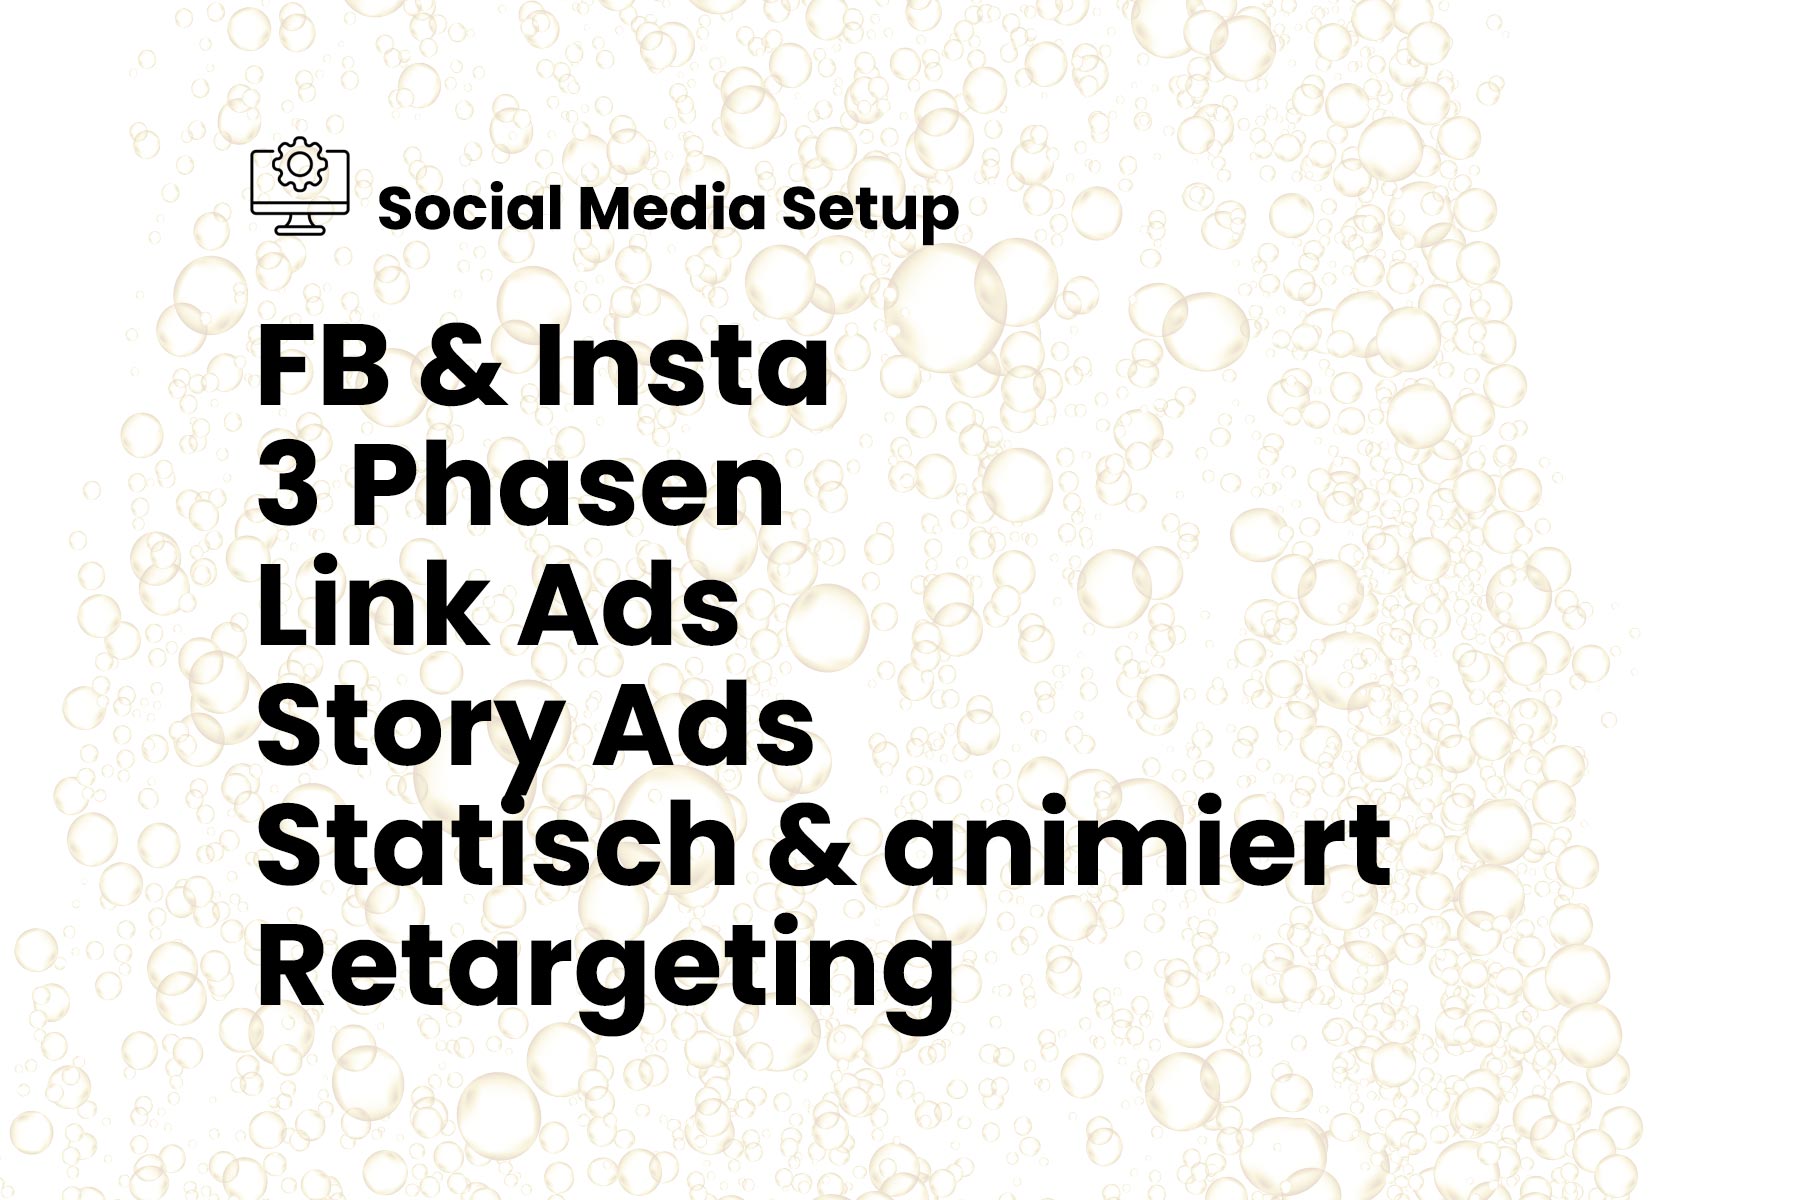 Social Media Setup Facebook & Instagram: 3 Phasen, Link Ads, Story Ads, statisch & animiert, retargeting